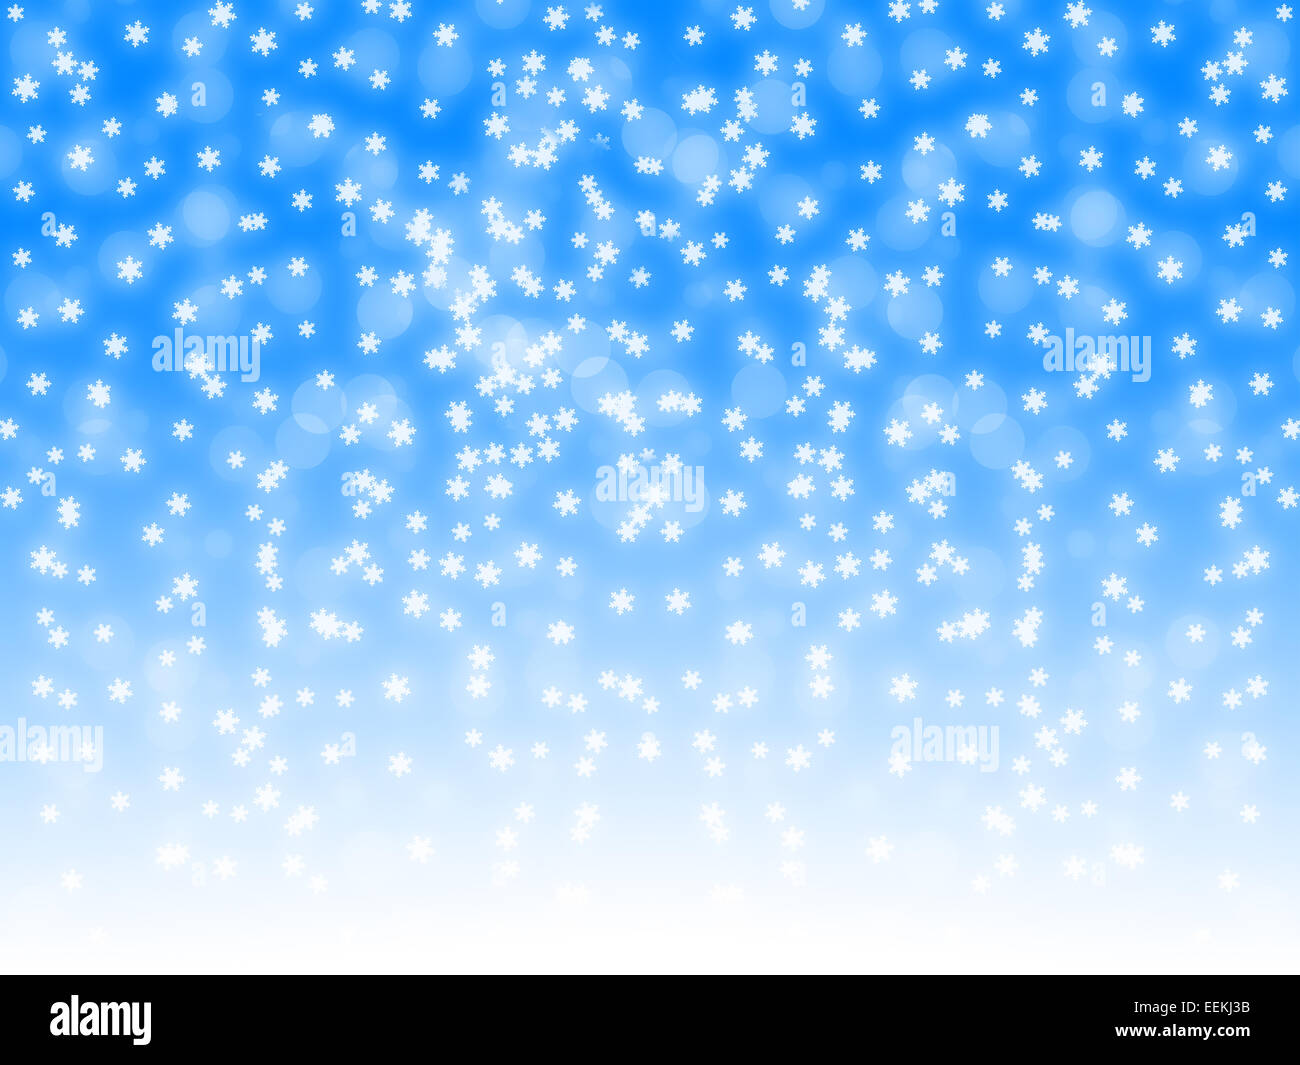 Snowfall on blue background Stock Photo